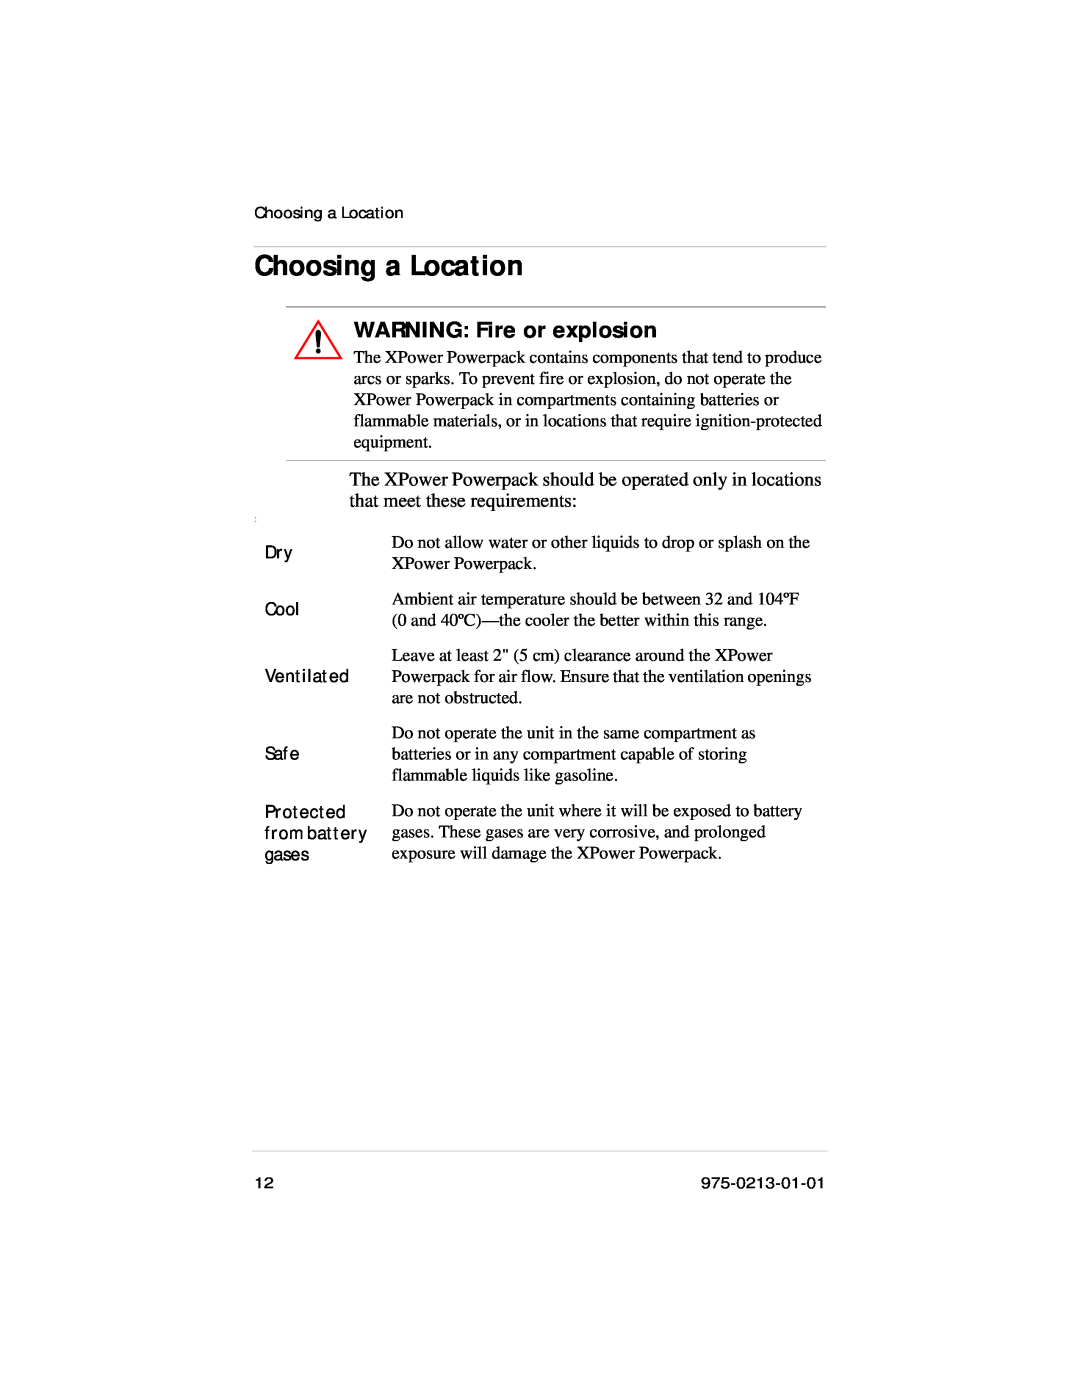 Xantrex Technology 600HD manual Choosing a Location, WARNING Fire or explosion 